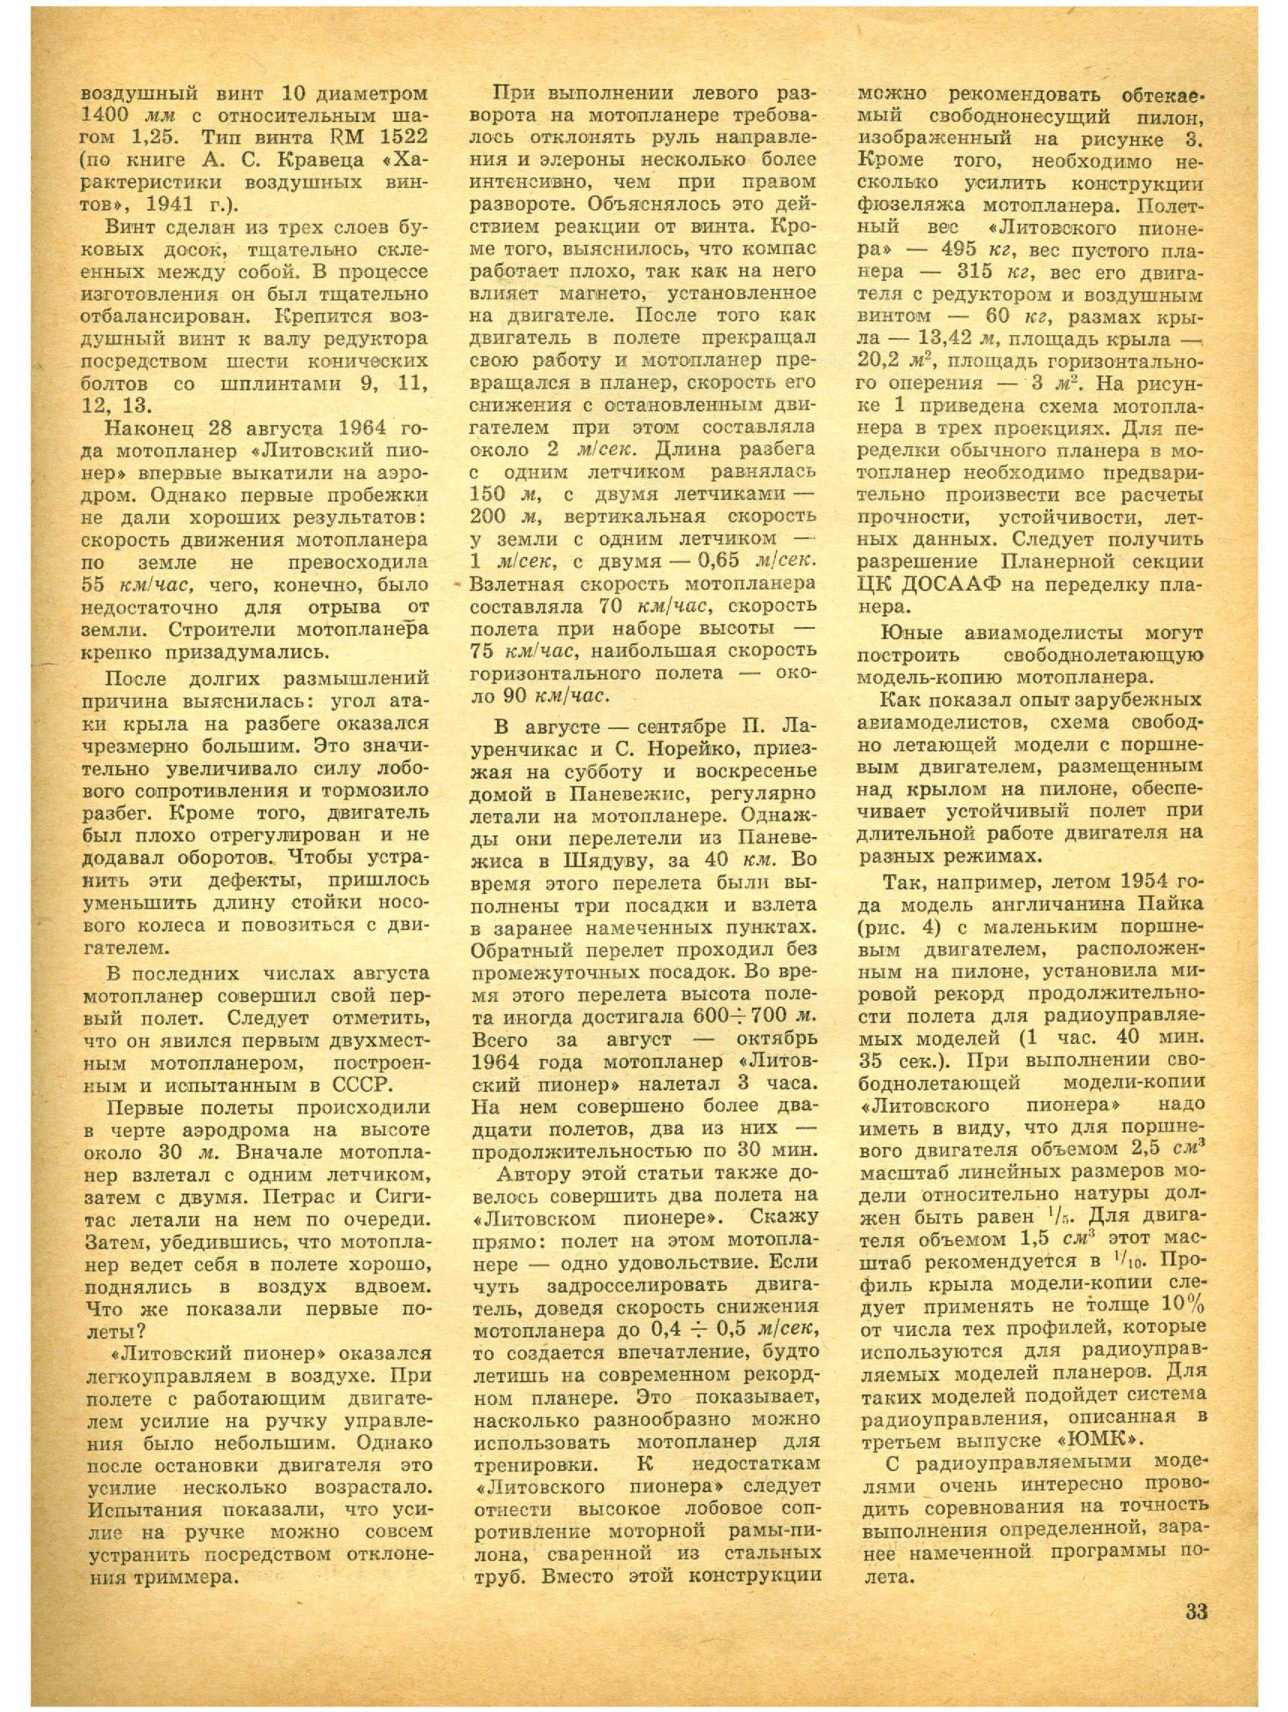 ЮМК 11, 1965, 33 c.